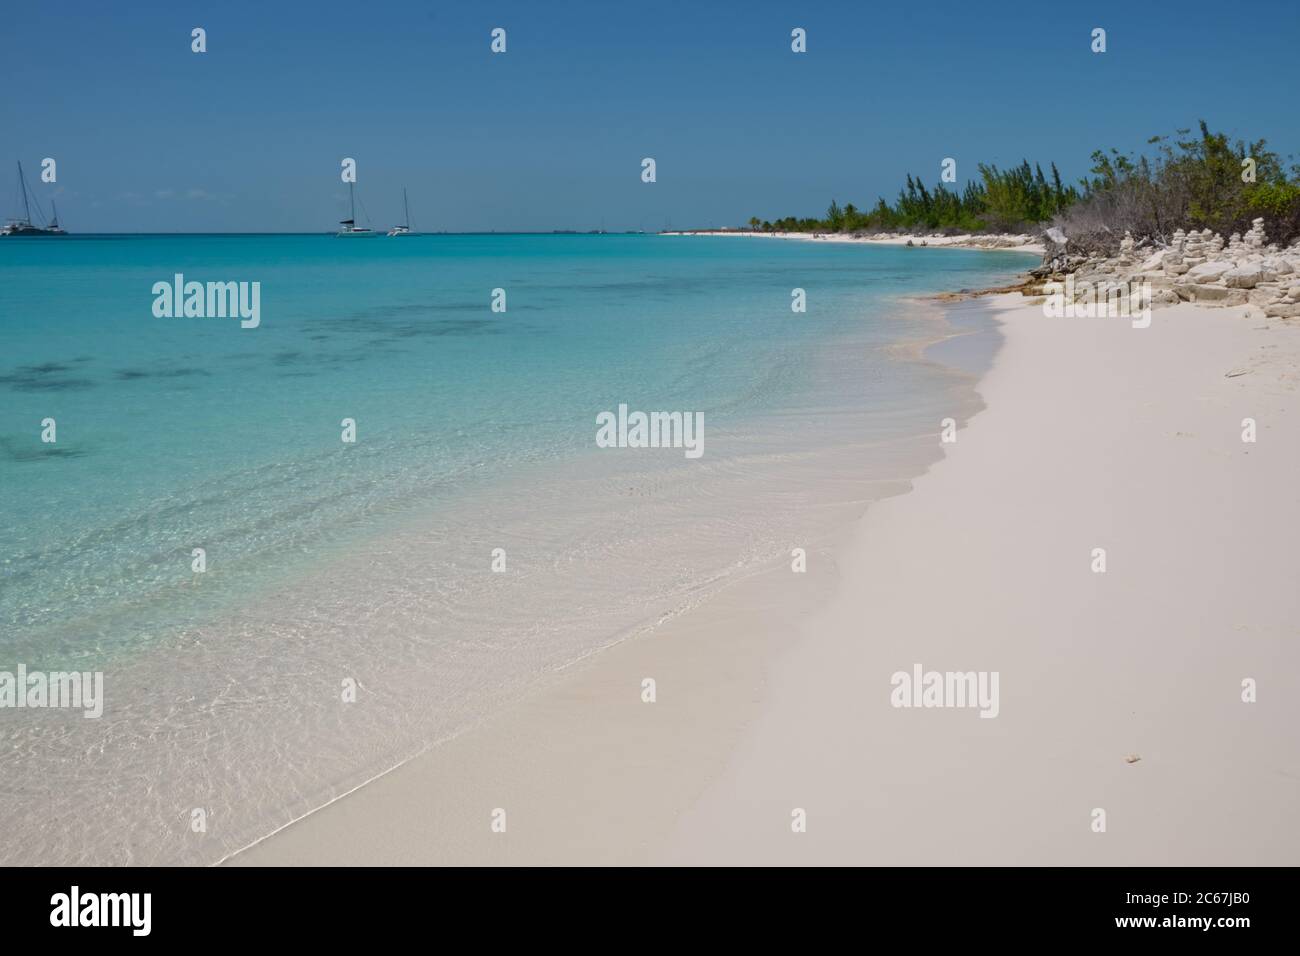 Caribbean beach. Cuba. Cayo largo. Empty beach. Stock Photo